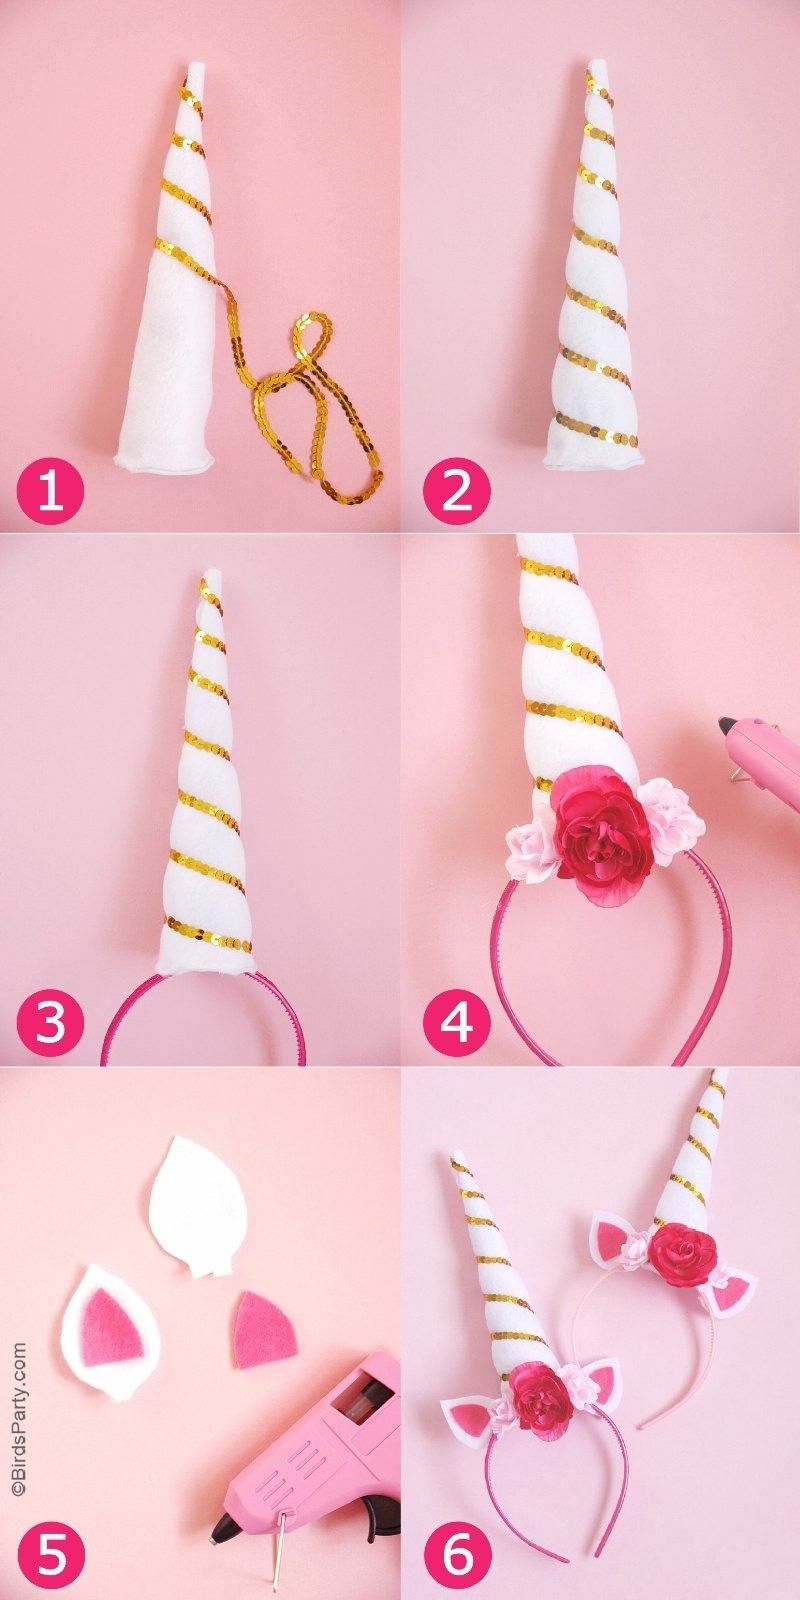 24 diy headbands unicorn
 ideas